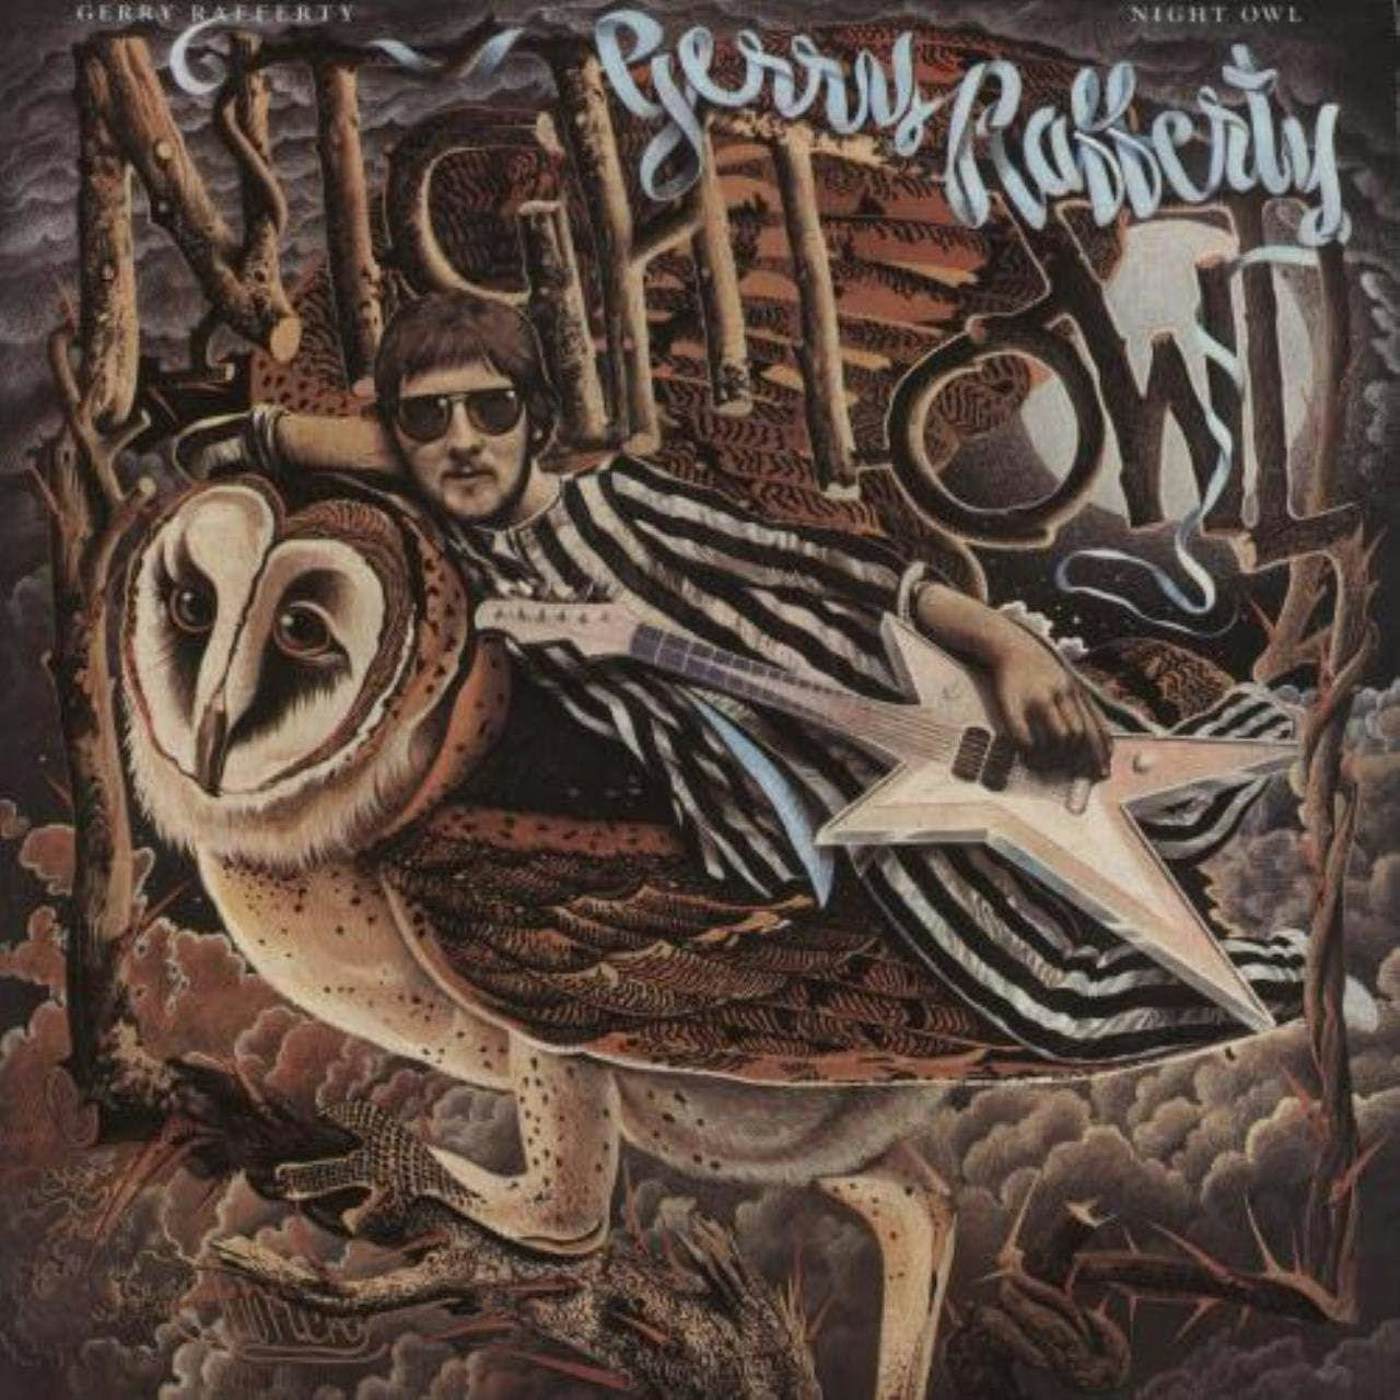 Gerry Rafferty NIGHT OWL Vinyl Record